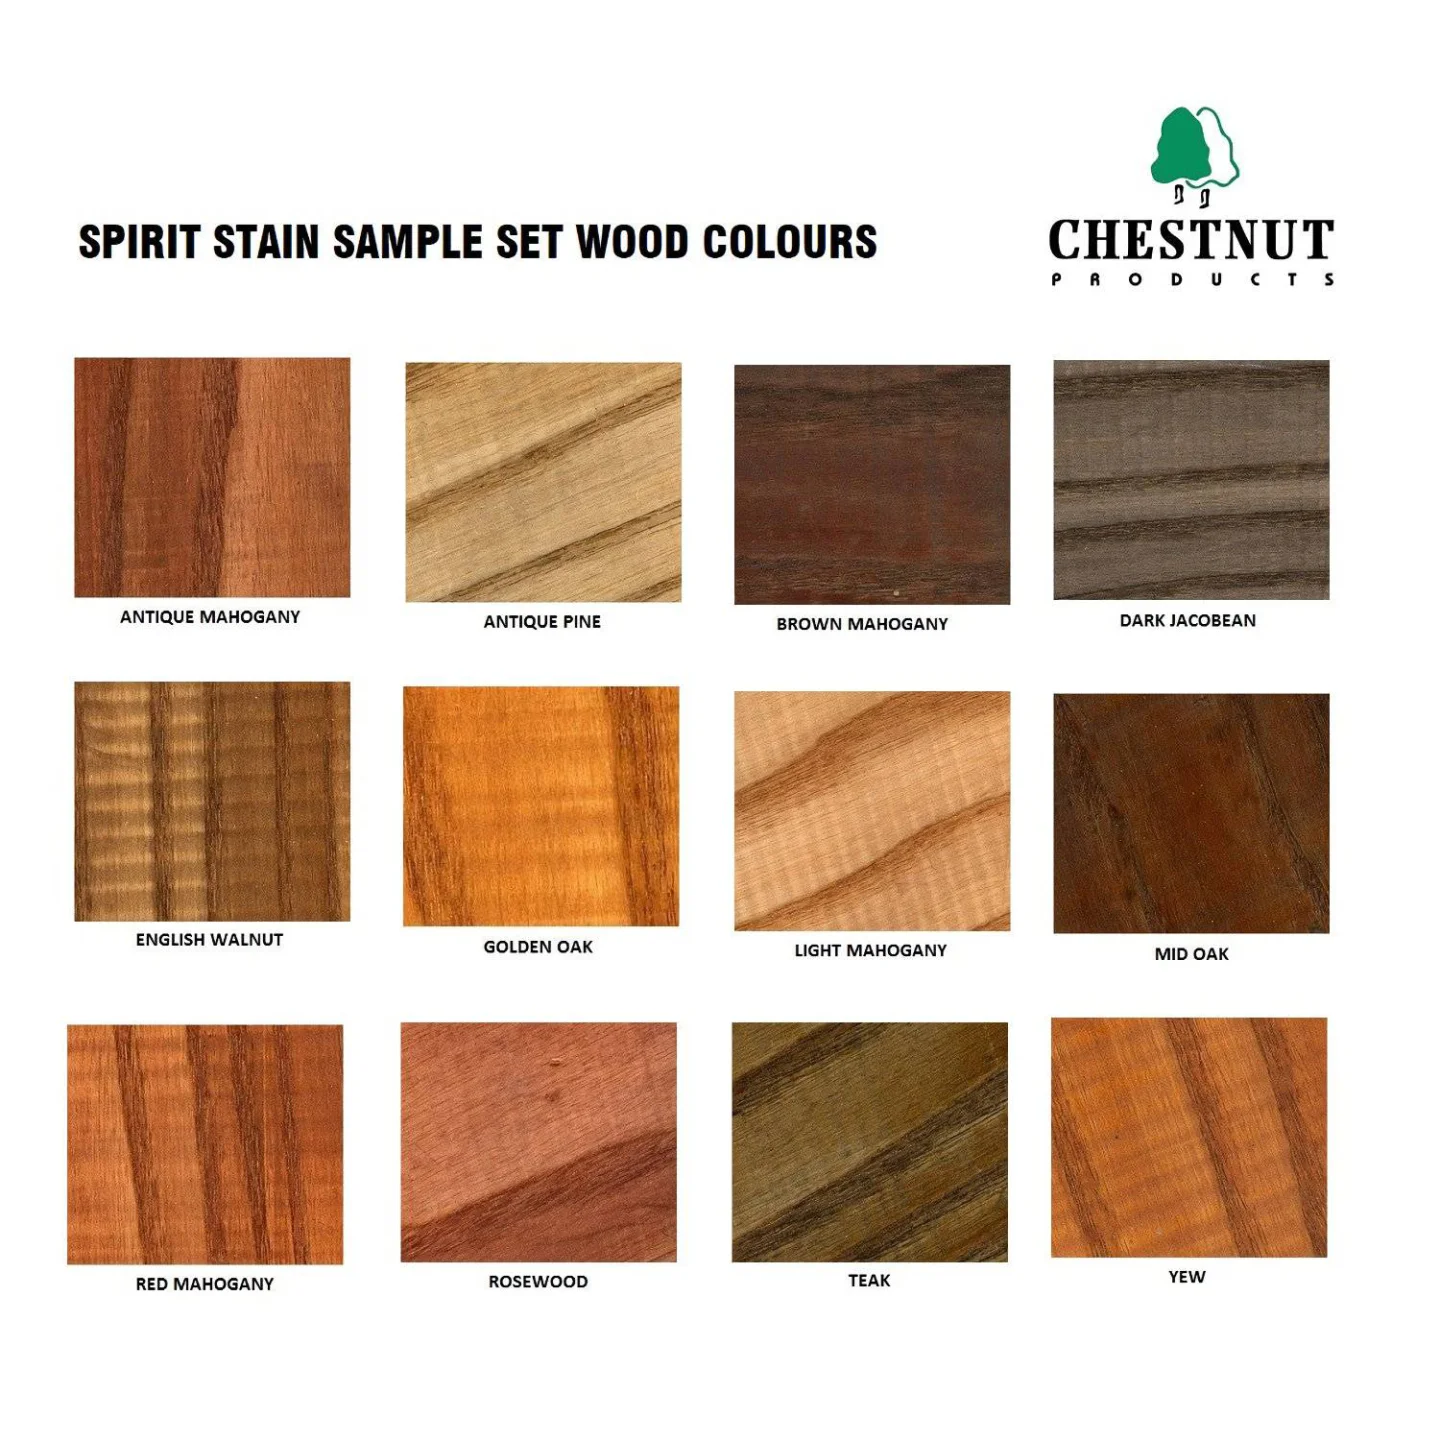 spirit stain sample set wood colours.